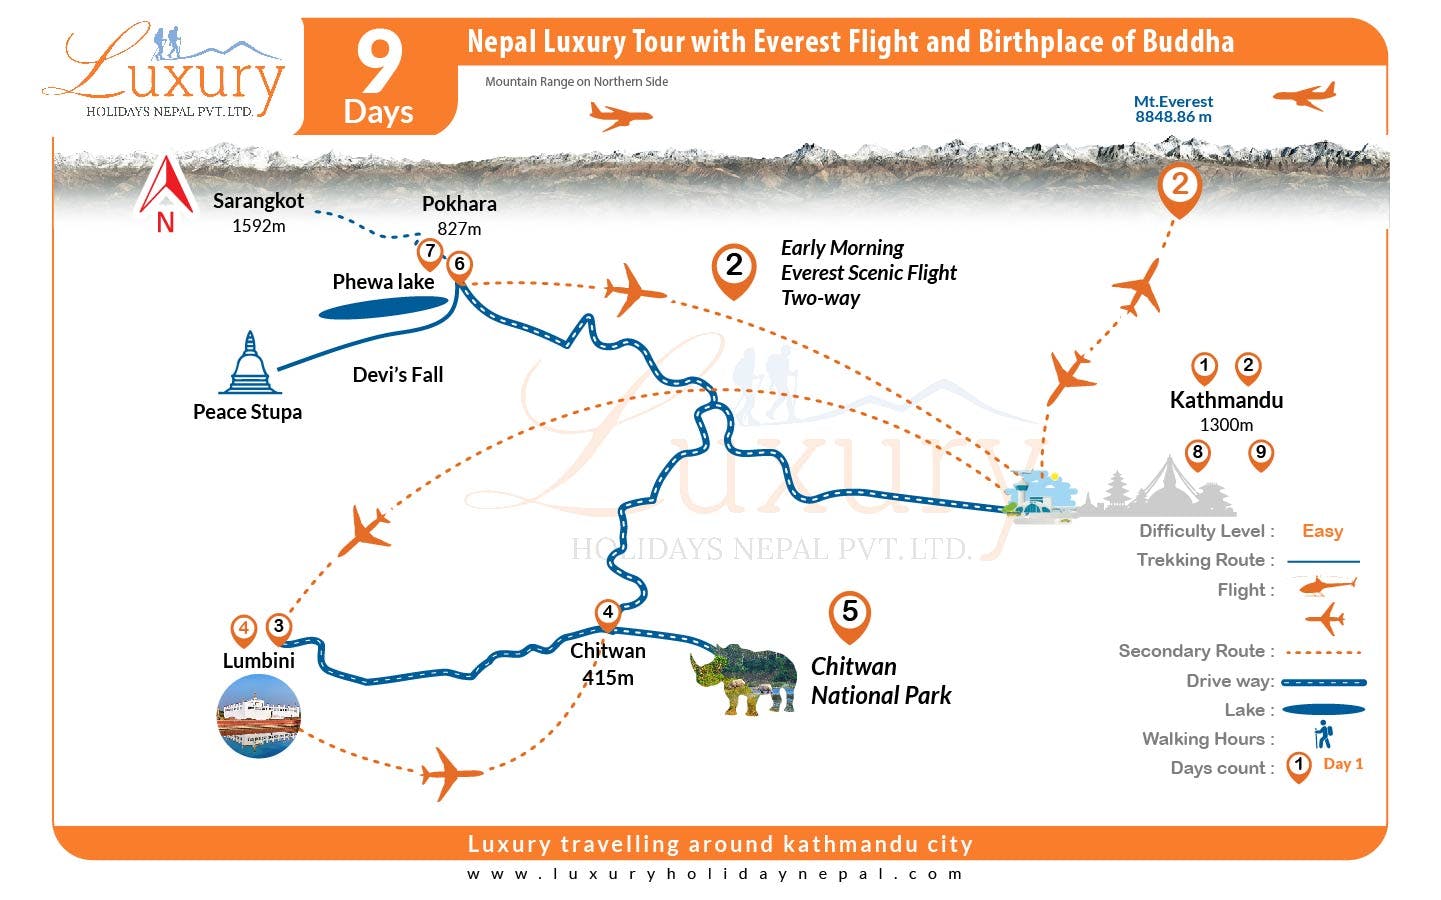 Nepal Luxury Tour with Everest flight and birthplace of BuddhaMap